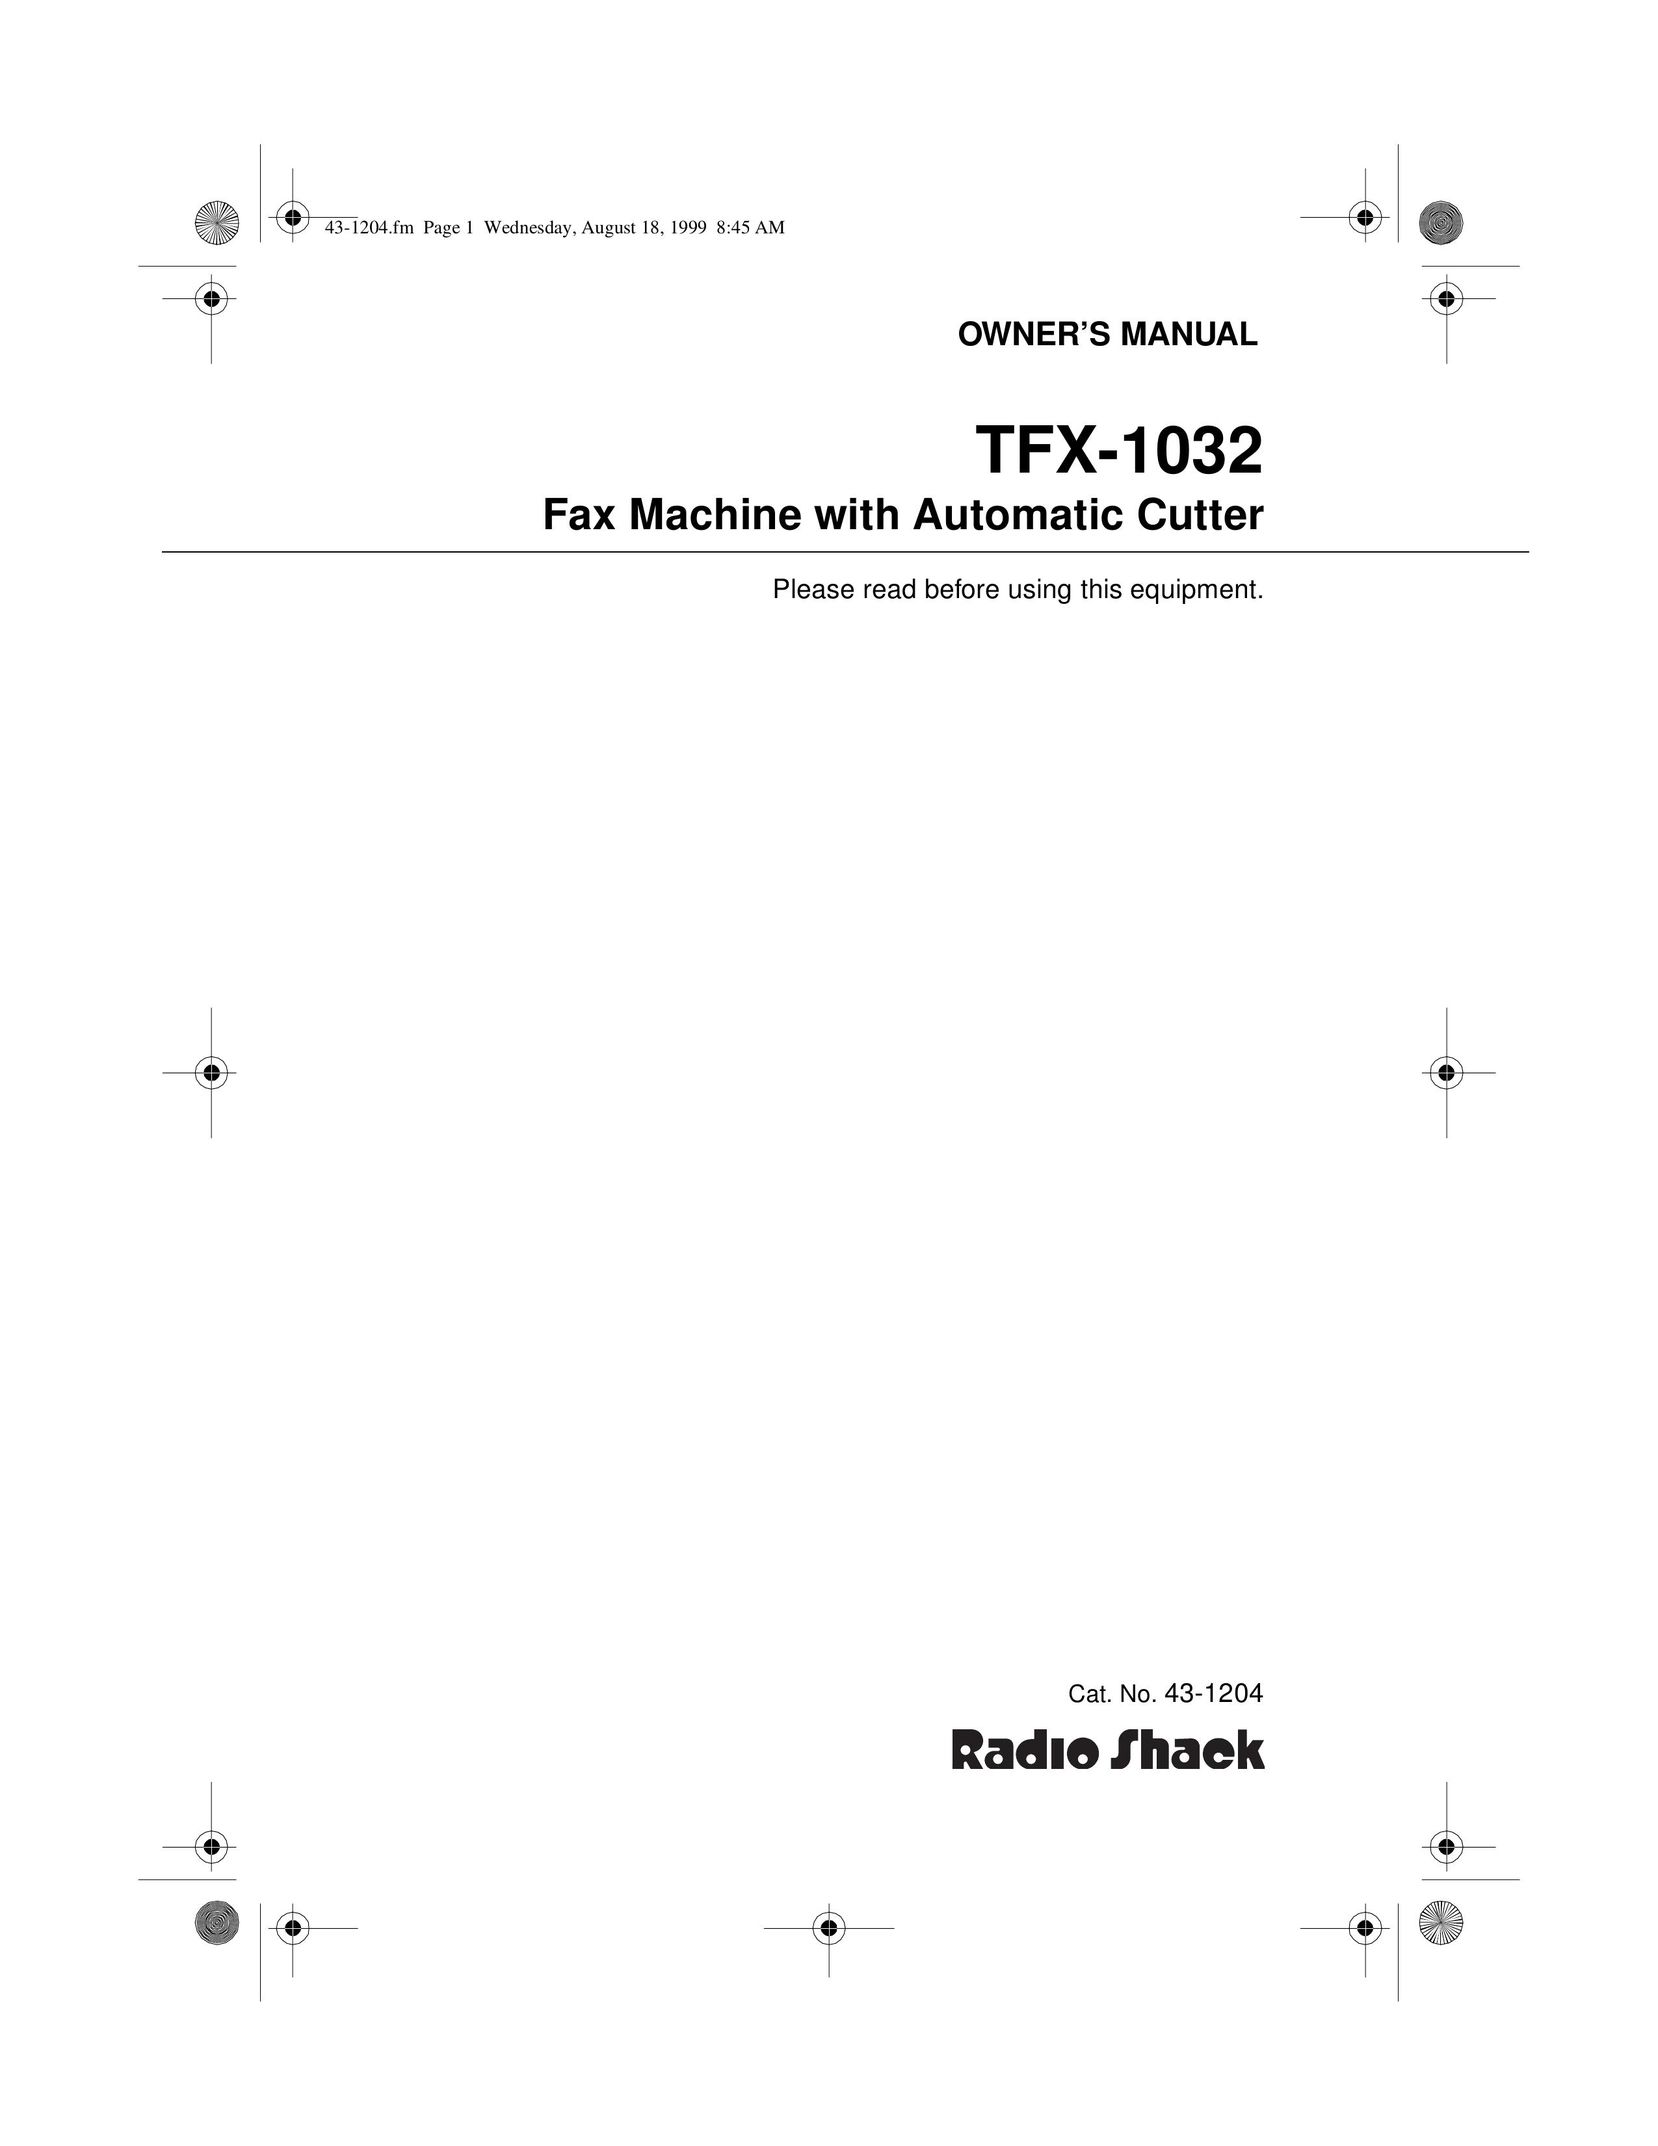 Radio Shack TFX-1032 Fax Machine User Manual